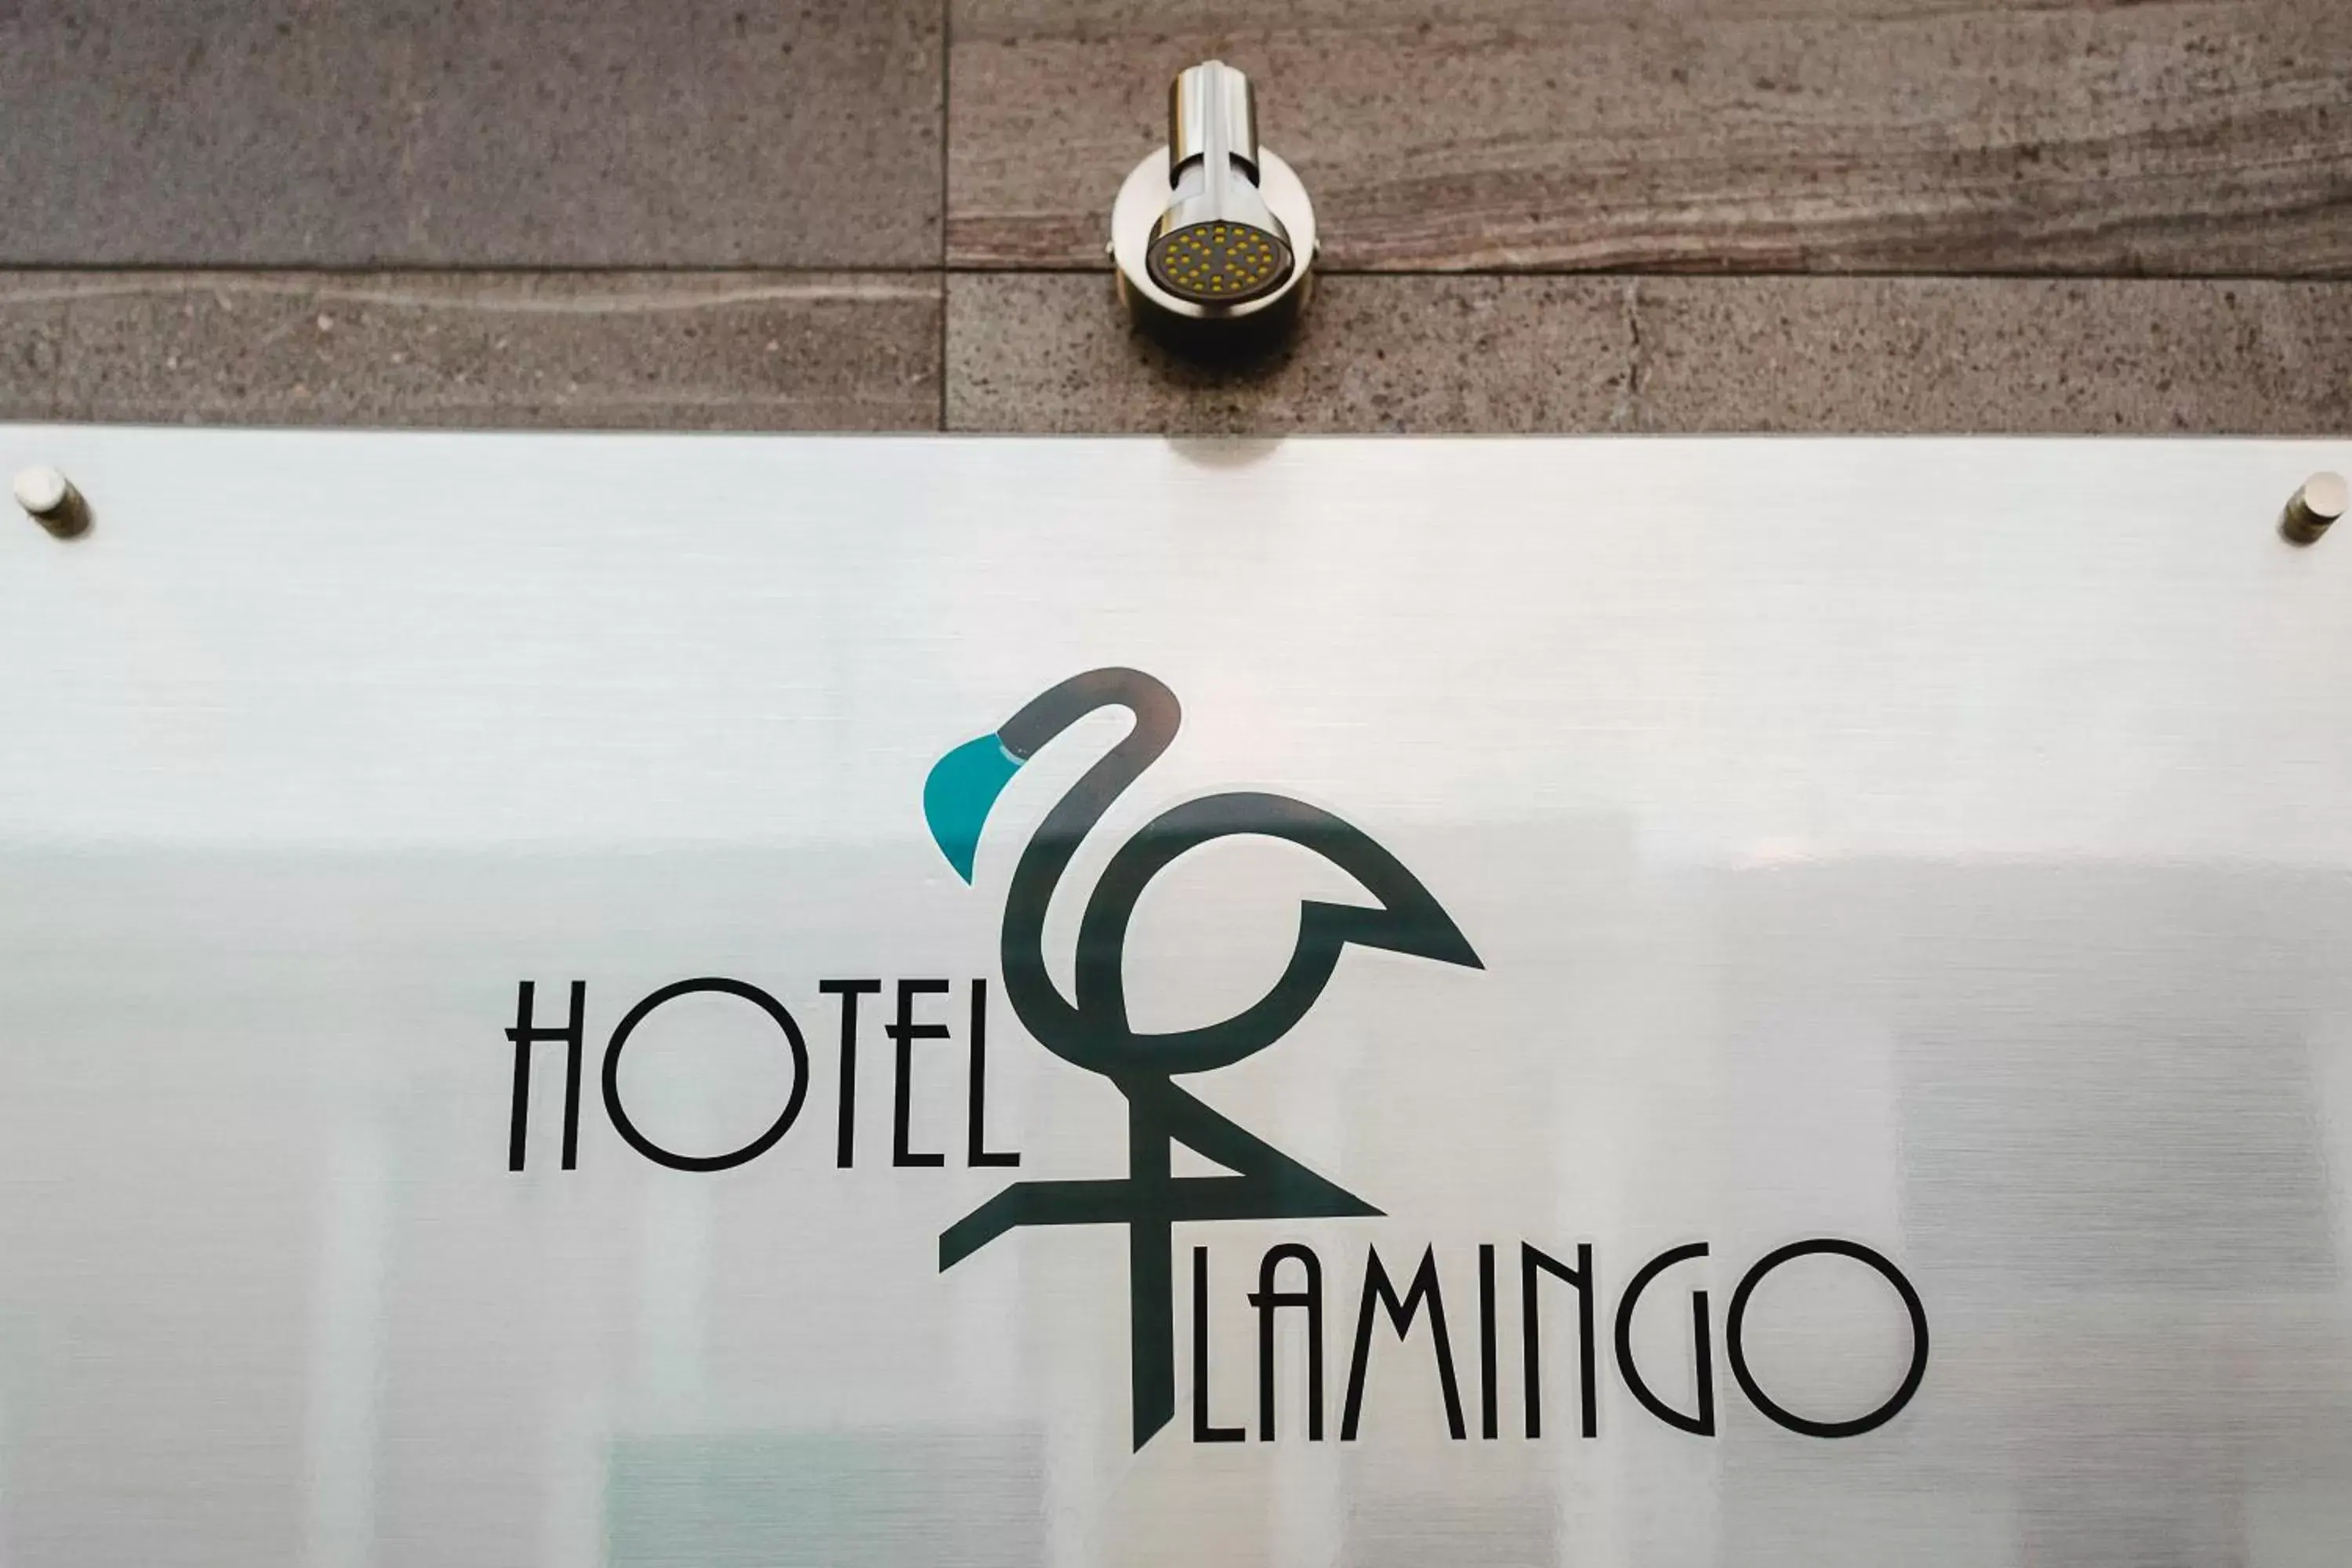 Property logo or sign in Hotel Flamingo Merida